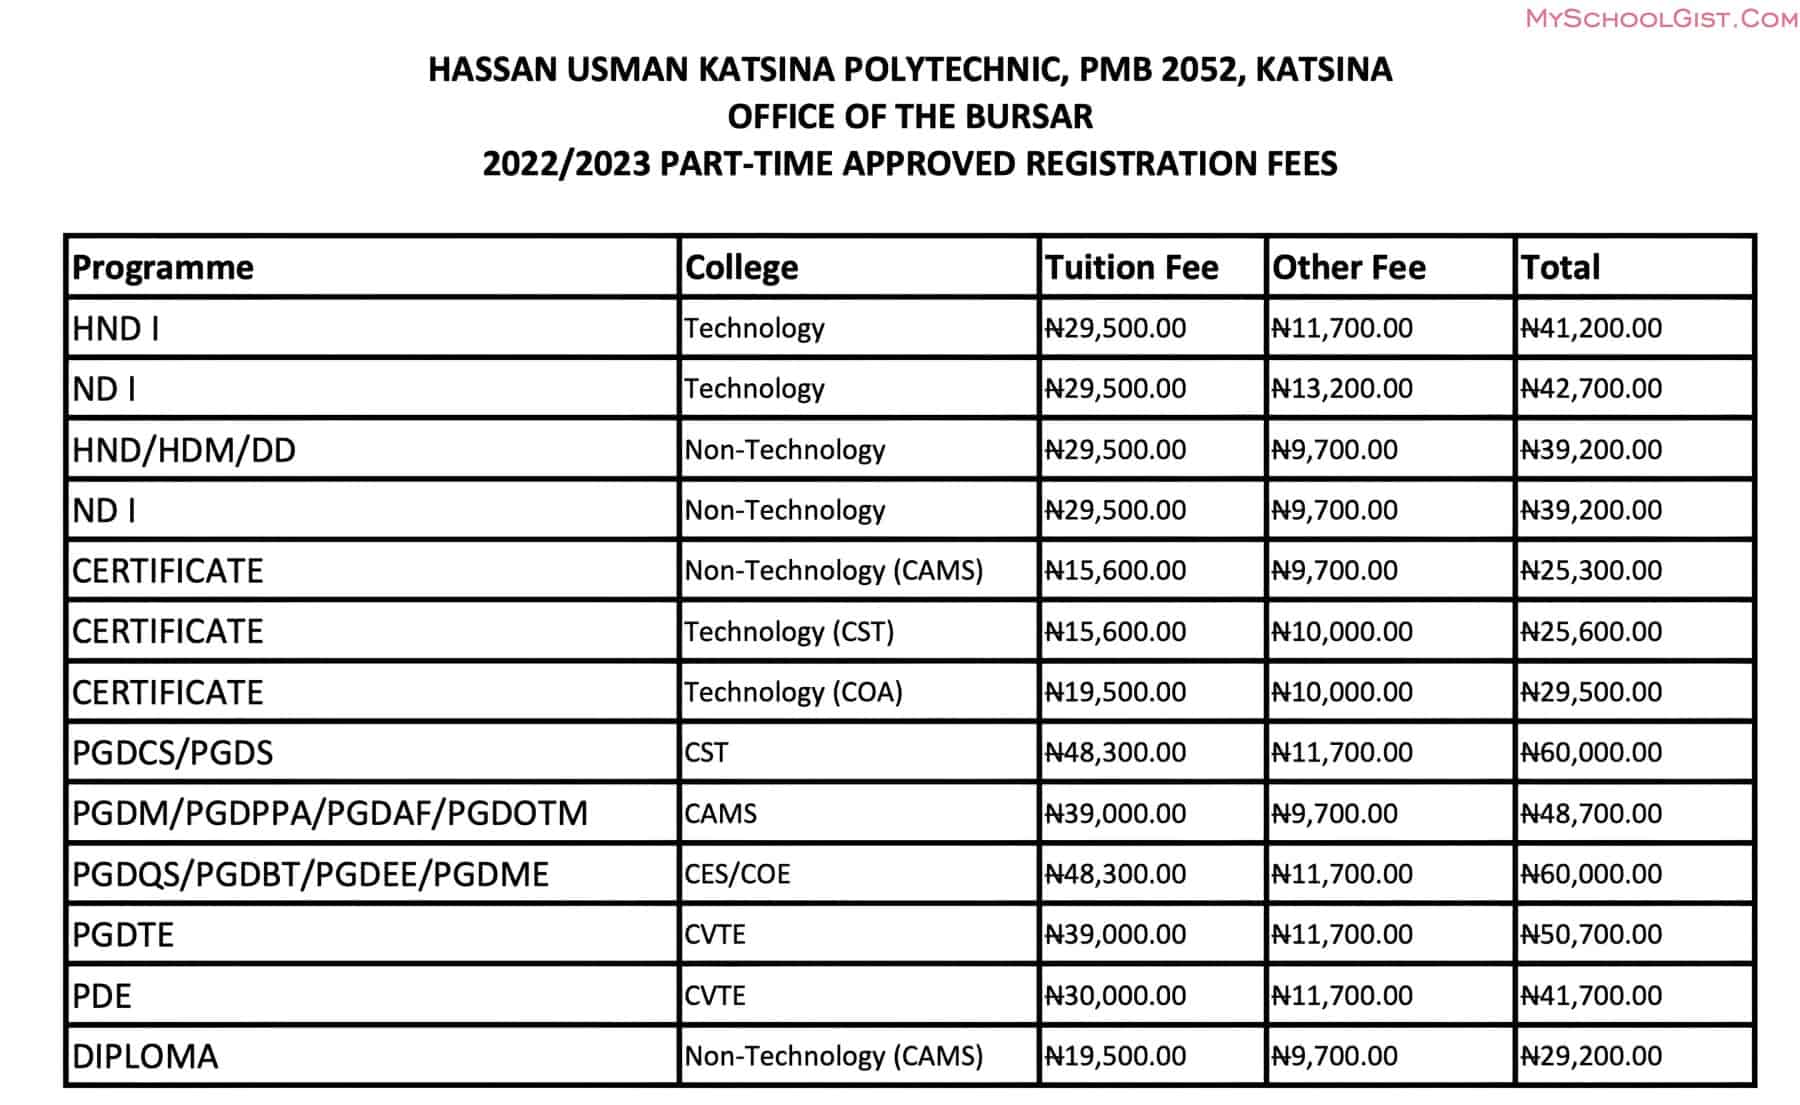 Hassan Usman Katsina Polytechnic School Fees for part-time students 2022-2023